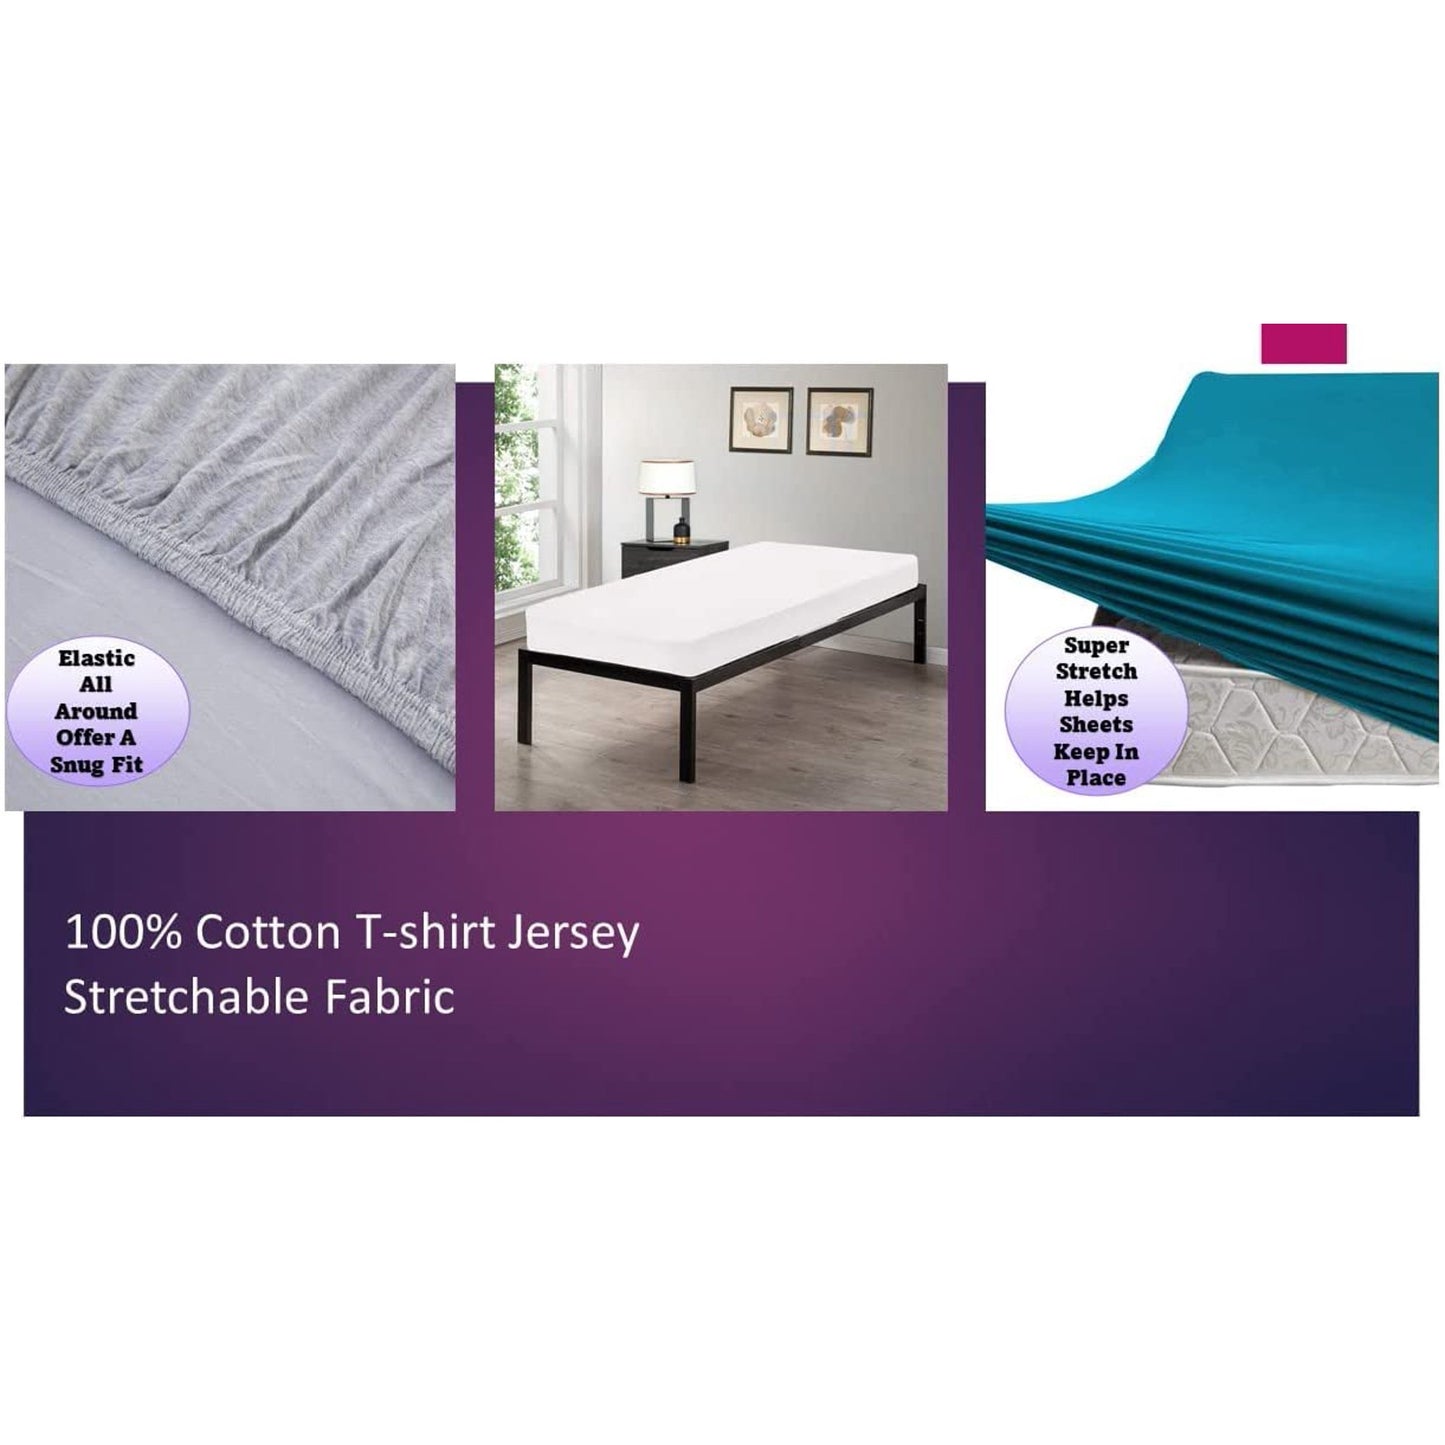 100% Combed T-Shirt Cotton Jersey Knit Camp Sheet Set, 1 Fitted cot Sheet, 1 Flat Sheet, 1 Standard Pillow case Heather Grey